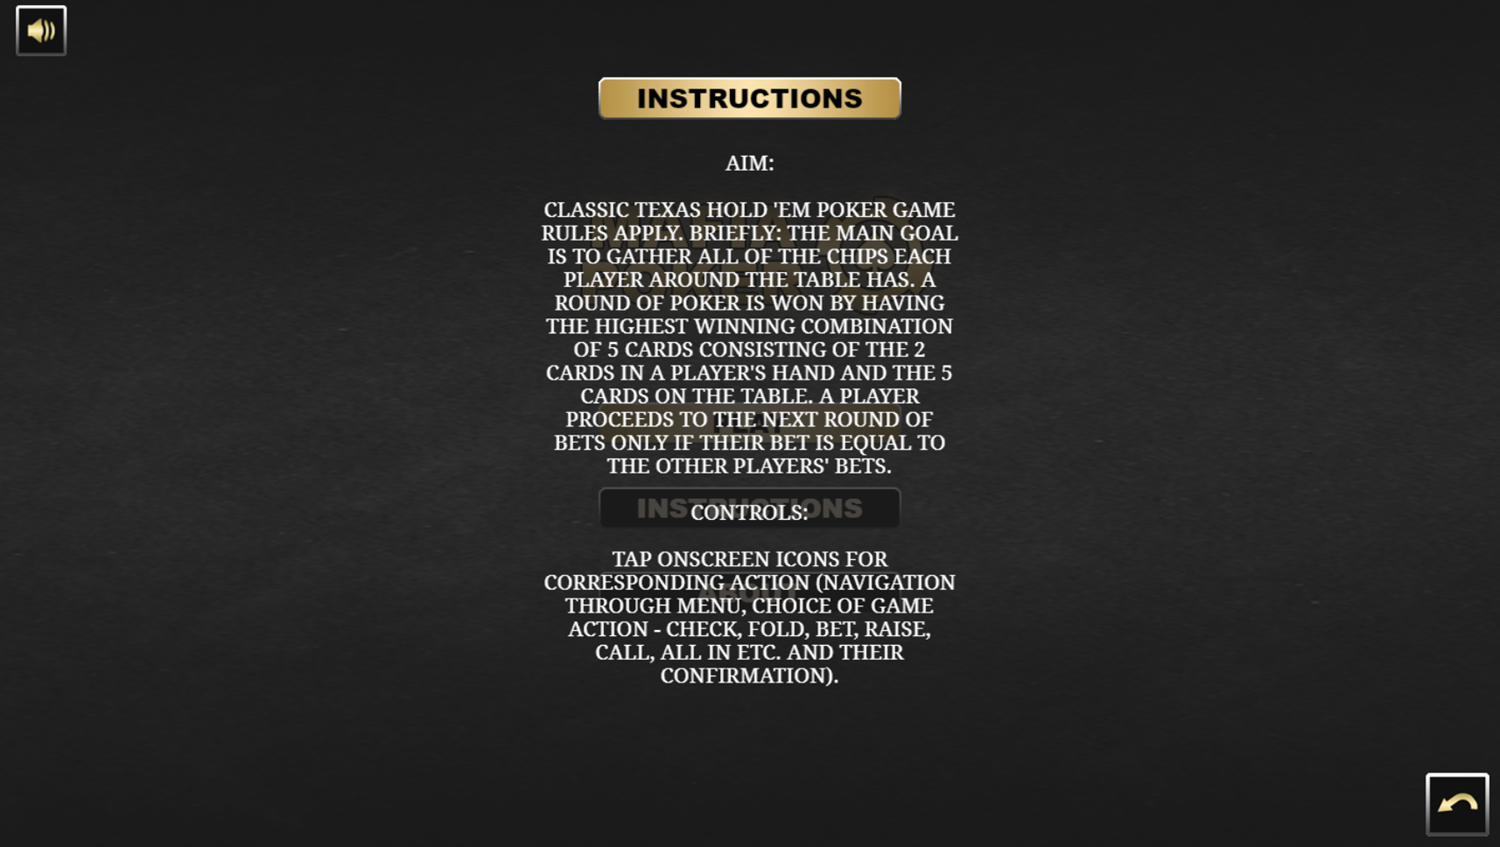 Mafia Poker Game Instructions Screenshot.